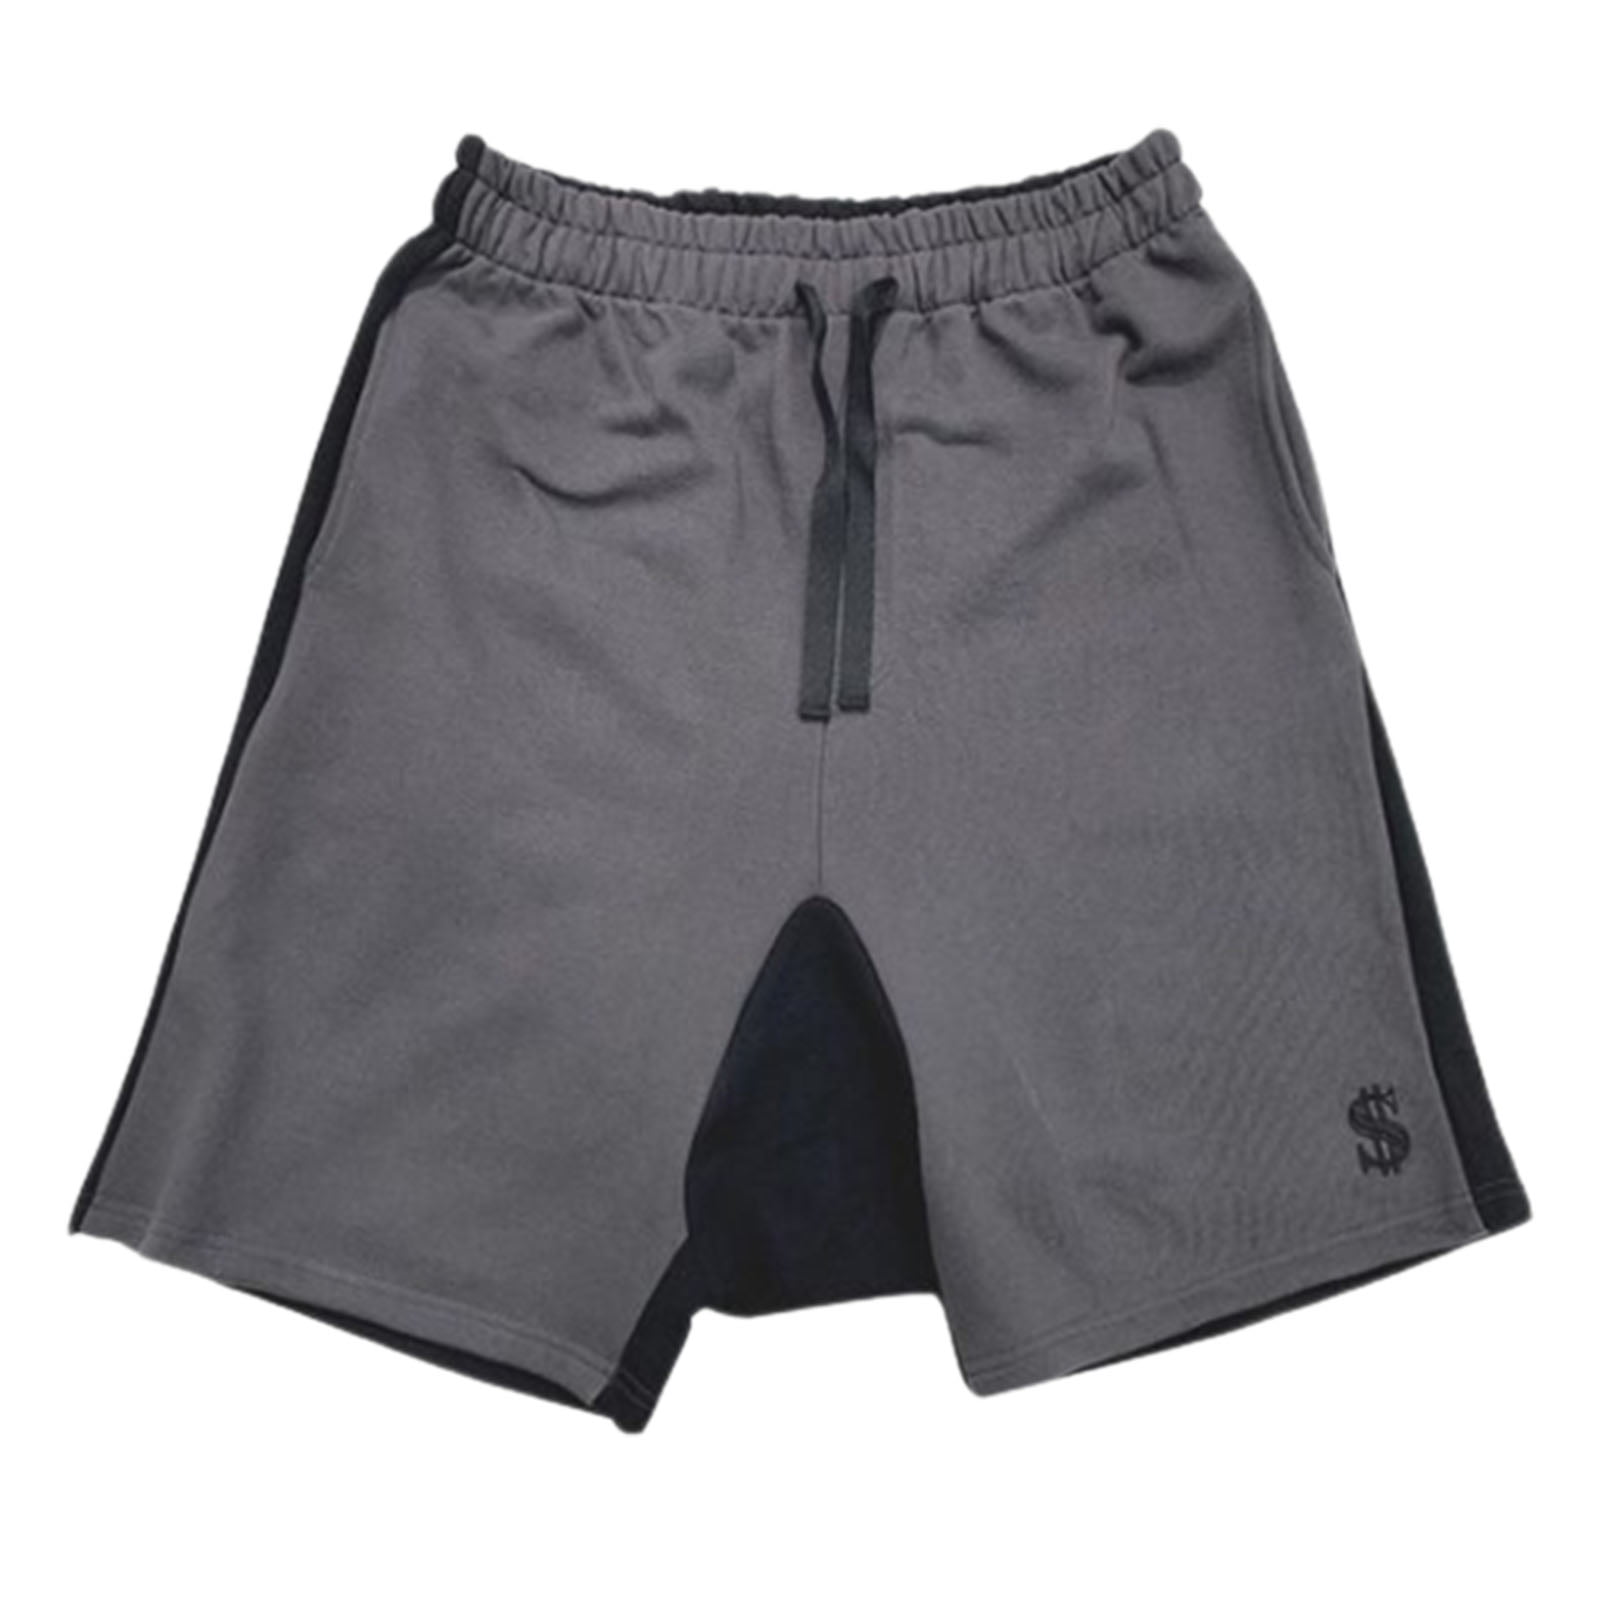 Details about   Men's Shorts Pockets Casual Basketball Shorts Plain Mesh Shorts Iphone Pocket 